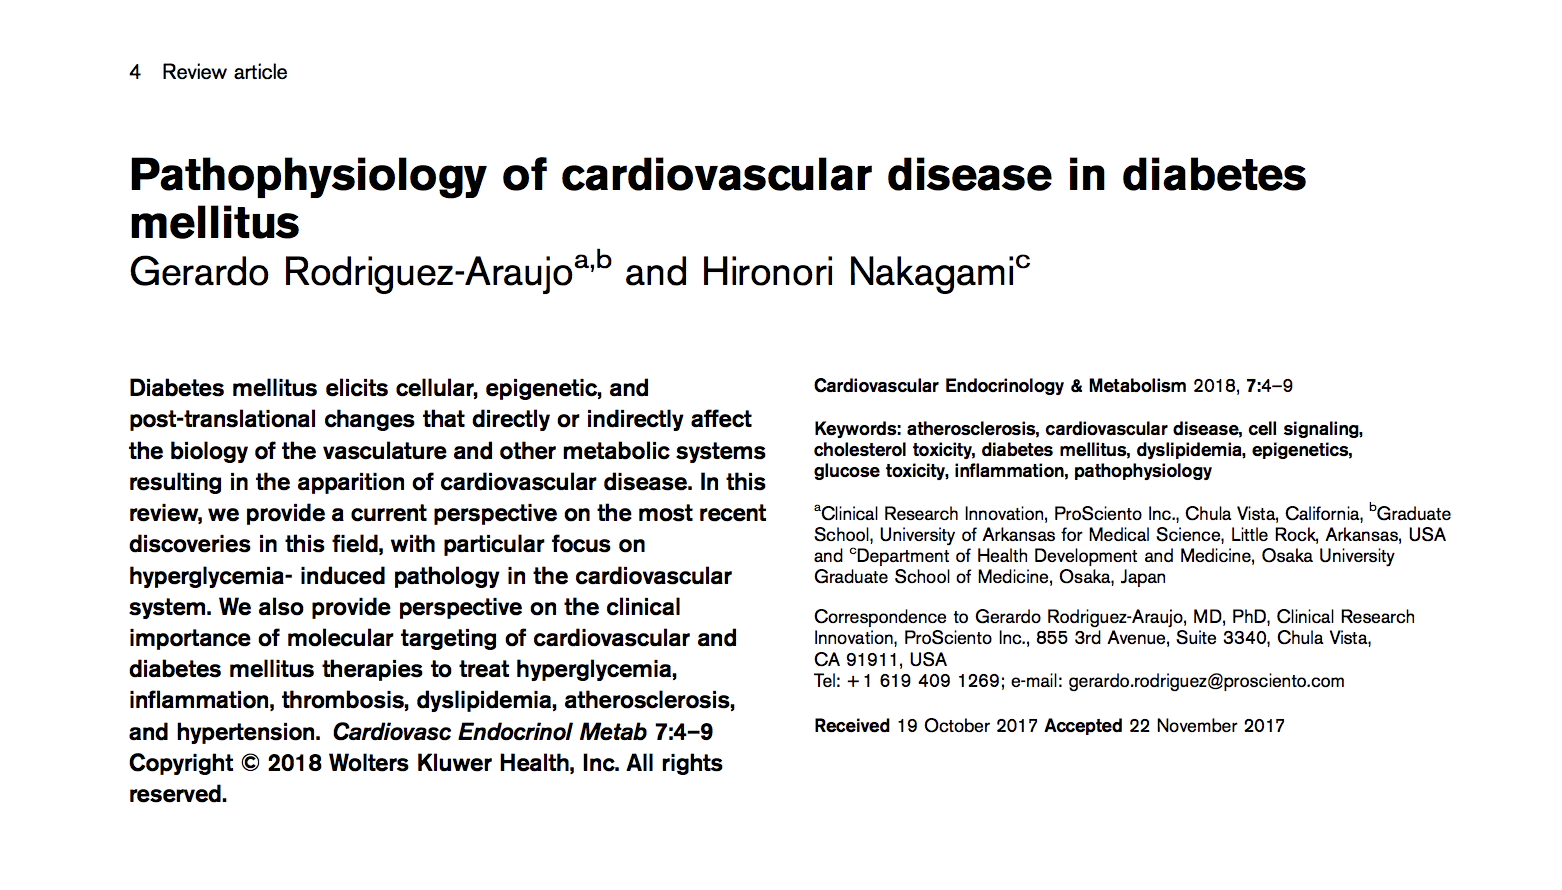 image of Pathophysiology of cardiovascular disease in diabetes mellitus.